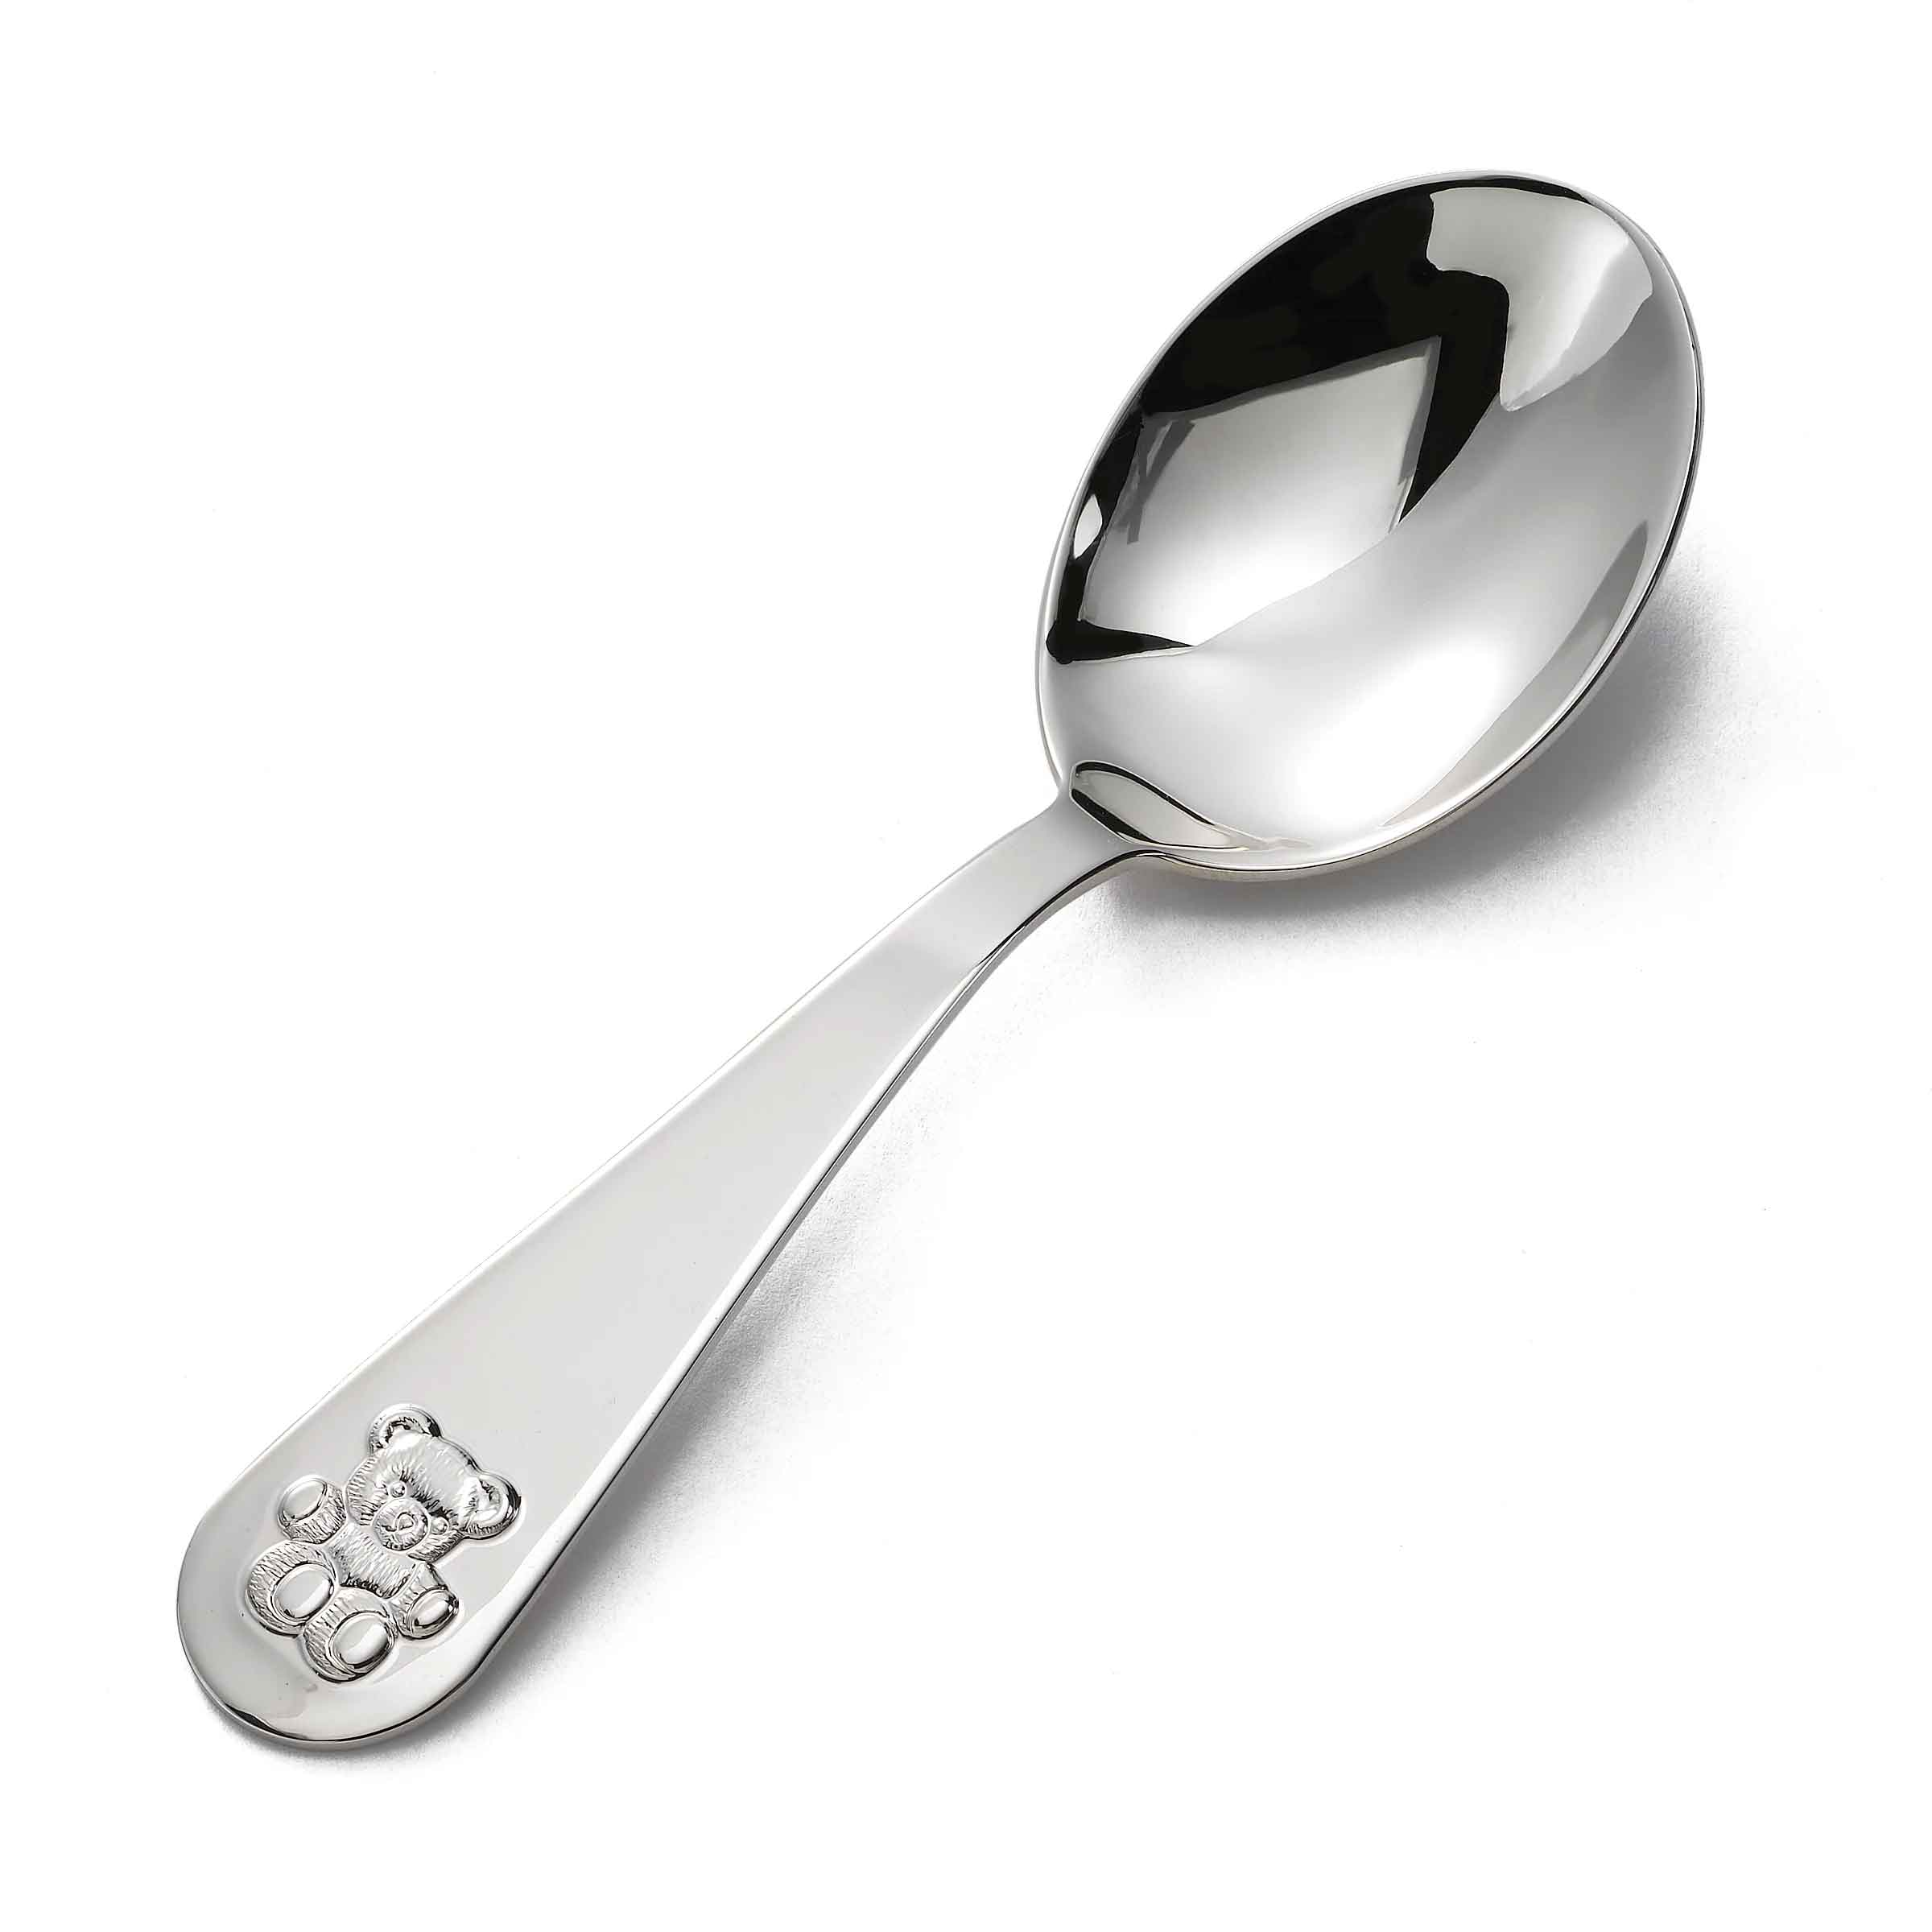 Silver Stailness Steel Baby Spoon, Spoon Shape: Designer, Size: 6 Inch